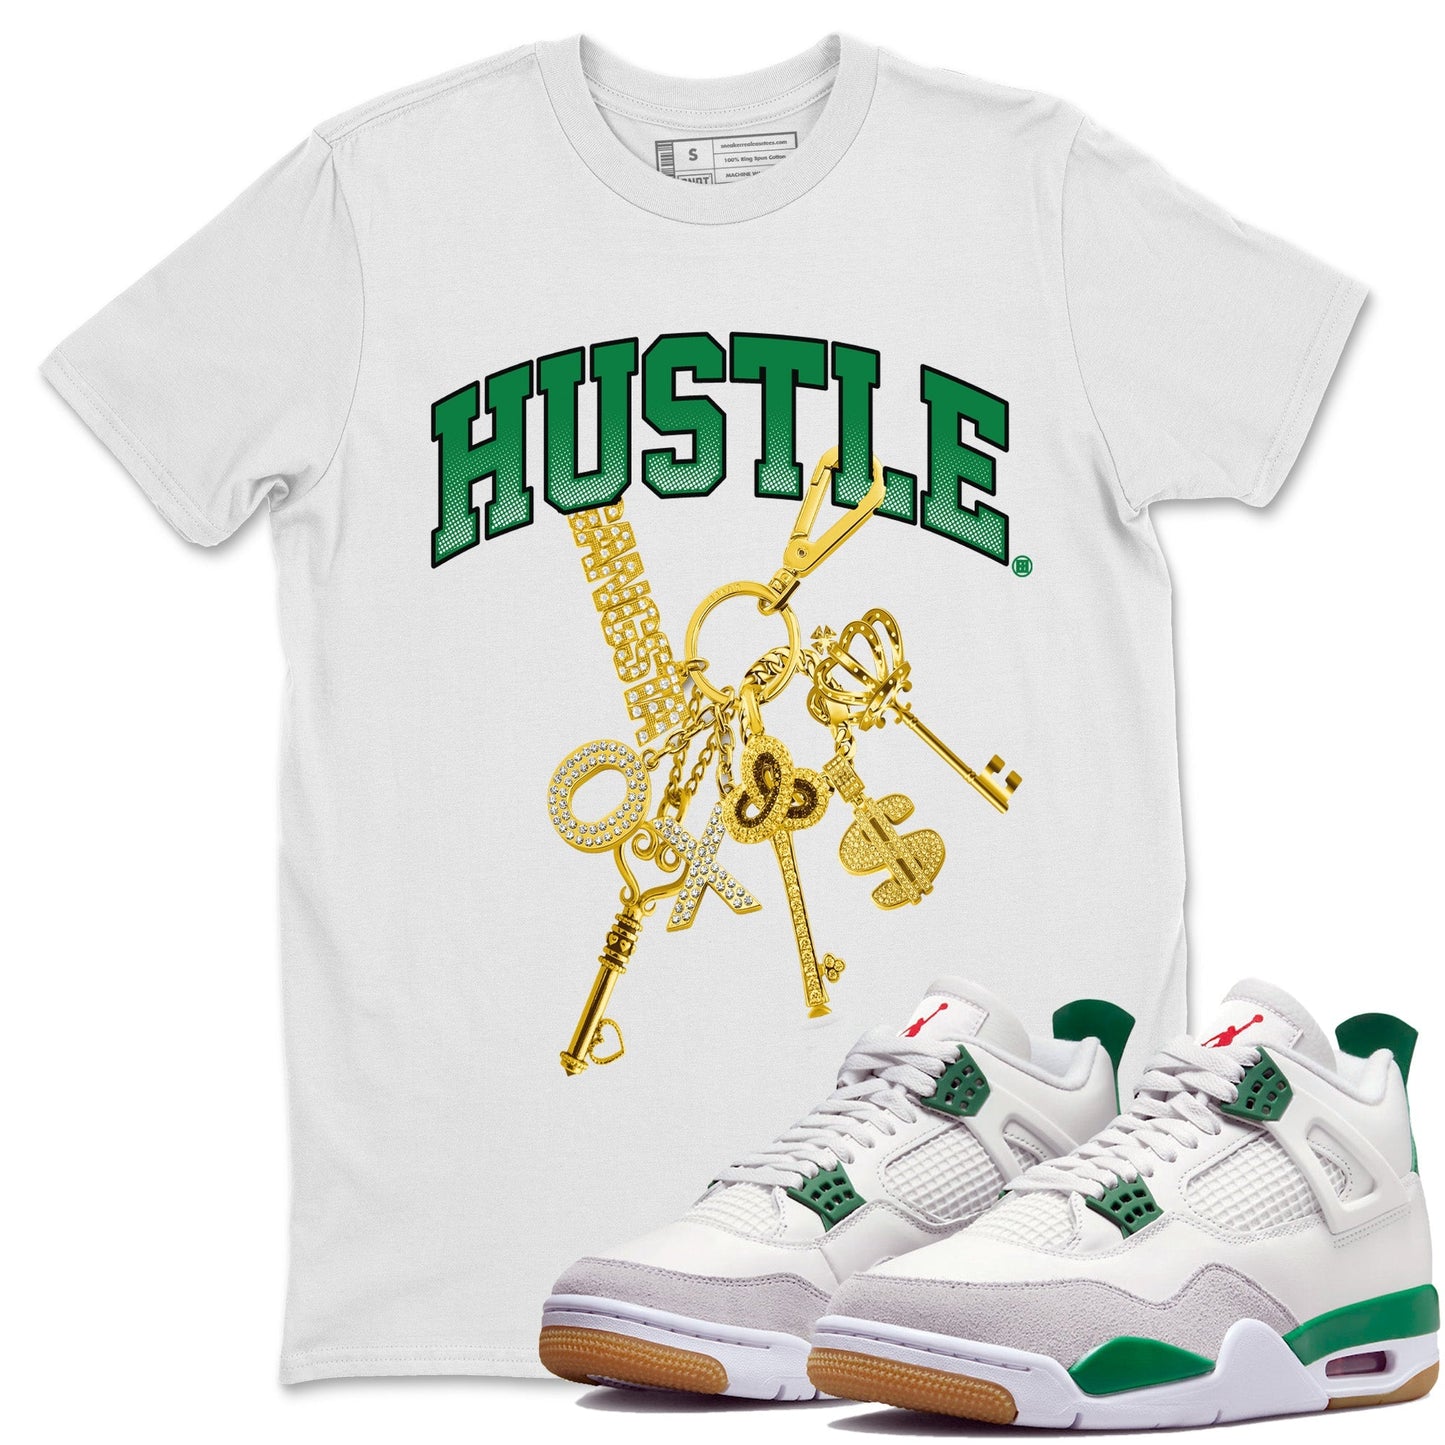 Air Jordan 4 Pine Green Sneaker Tees Drip Gear Zone Gold Hustle Sneaker Tees Nike SB x Jordan 4 Pine Green Shirt Unisex Shirts White 1